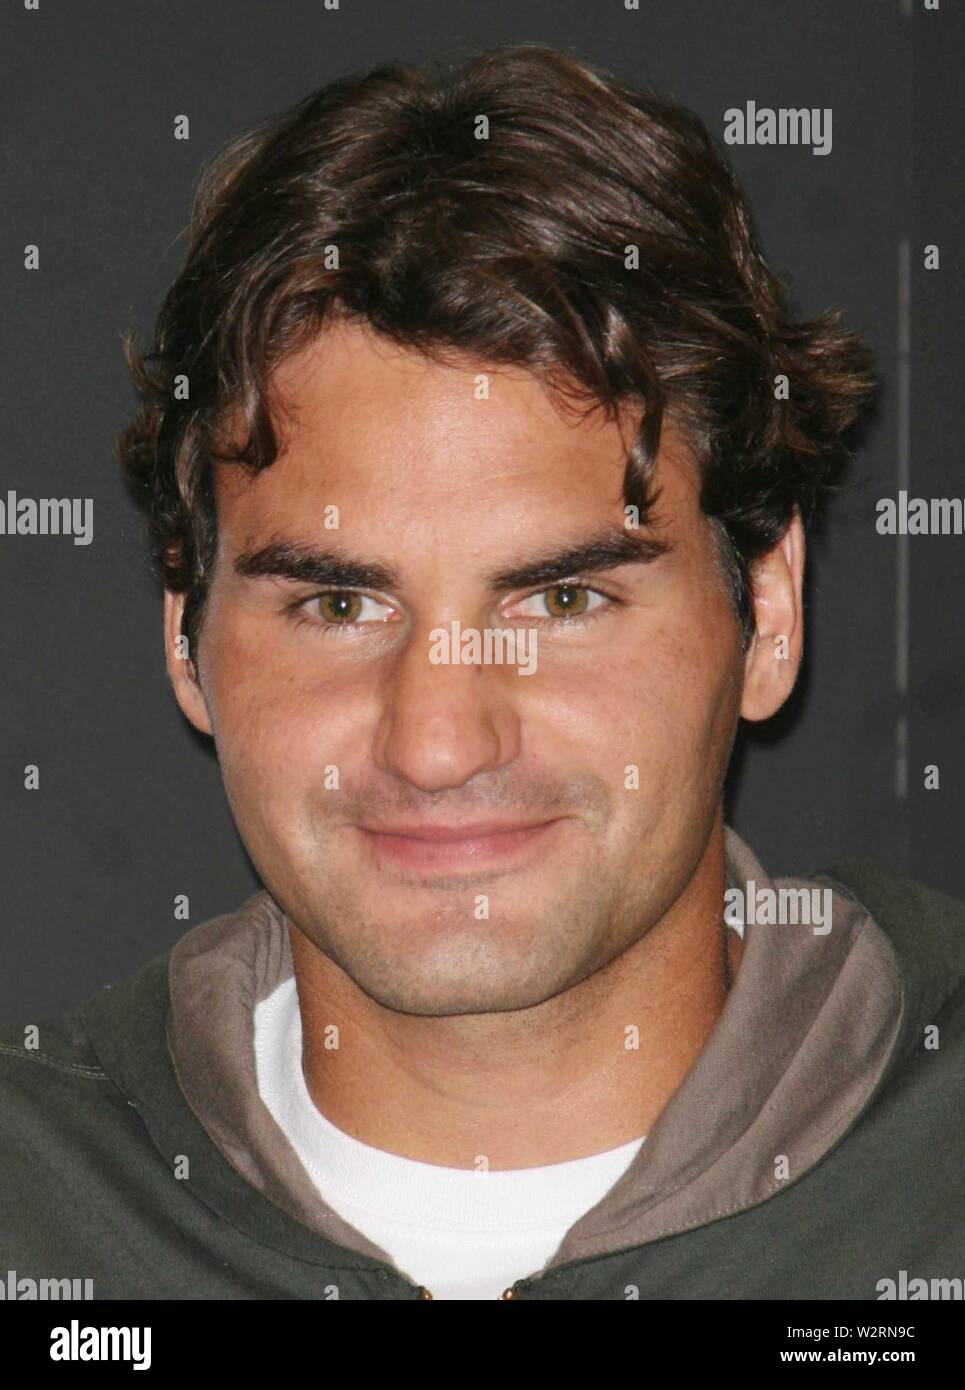 Roger Federer 2007 Photo By John Barrett/CelebrityArchaeology.com Photo via Newscom Stock Photo